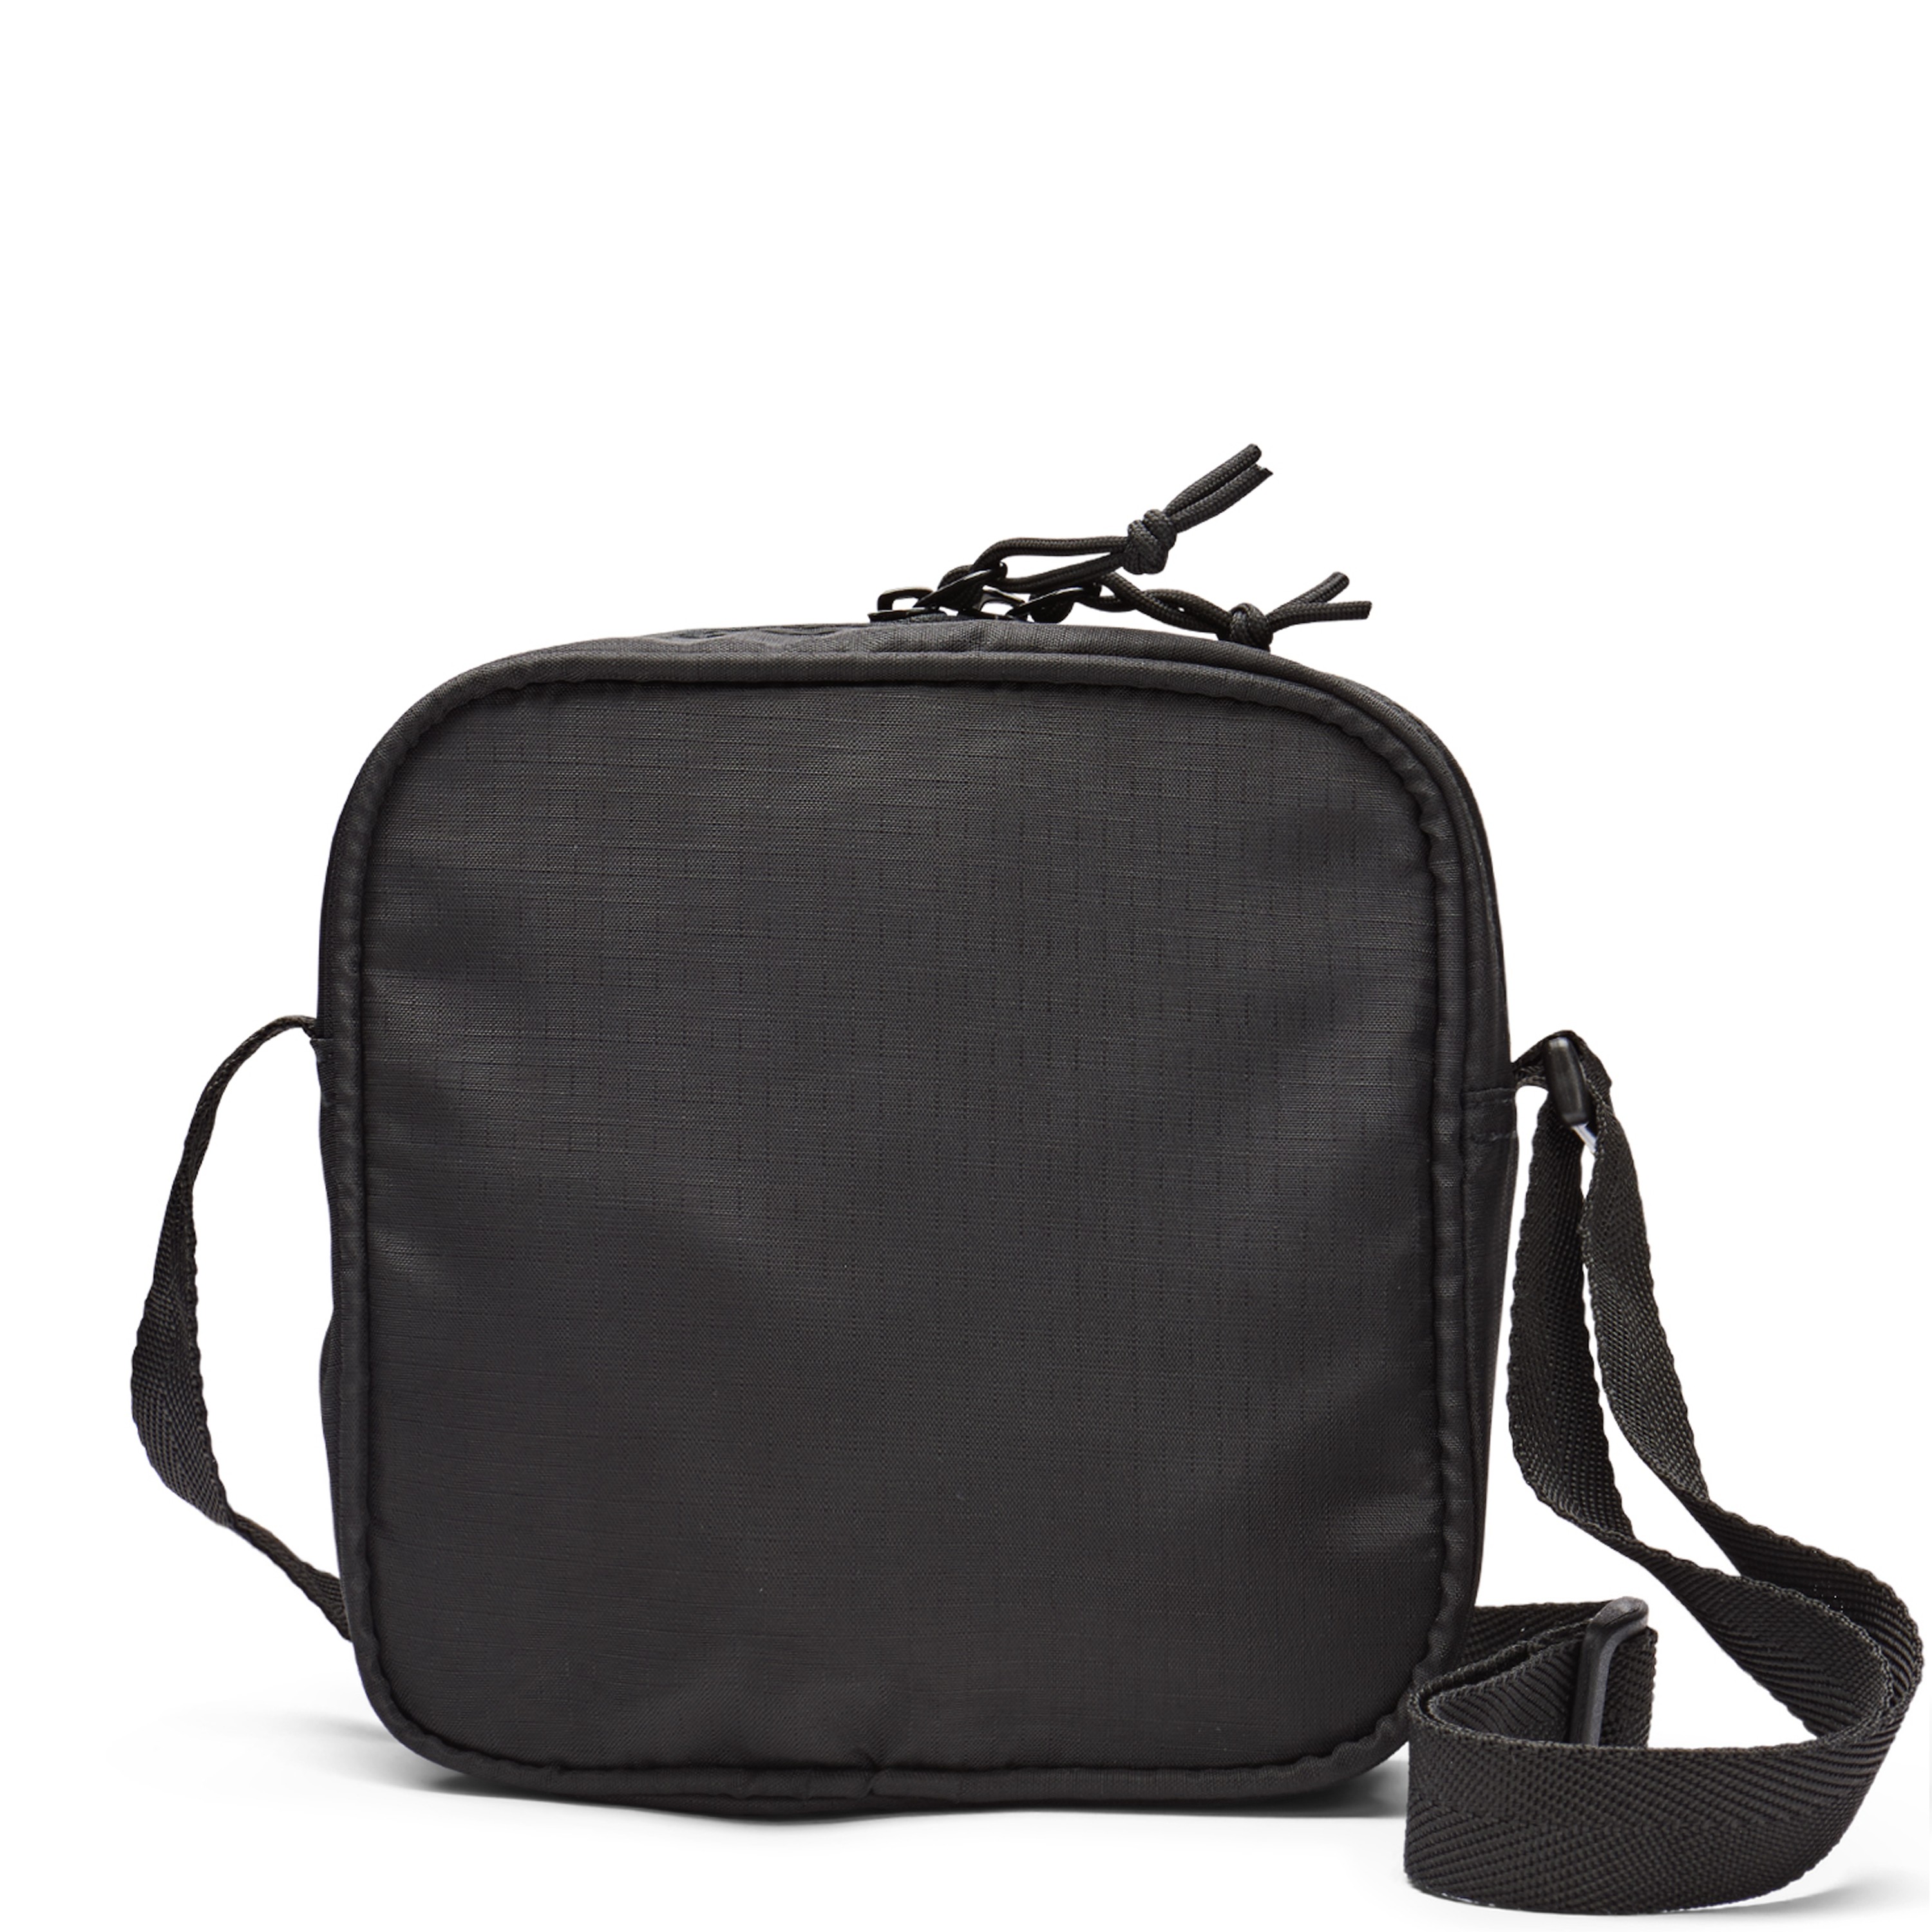 Polar Skate Co. Ripstop Dealer Bag (Black) - Consortium.